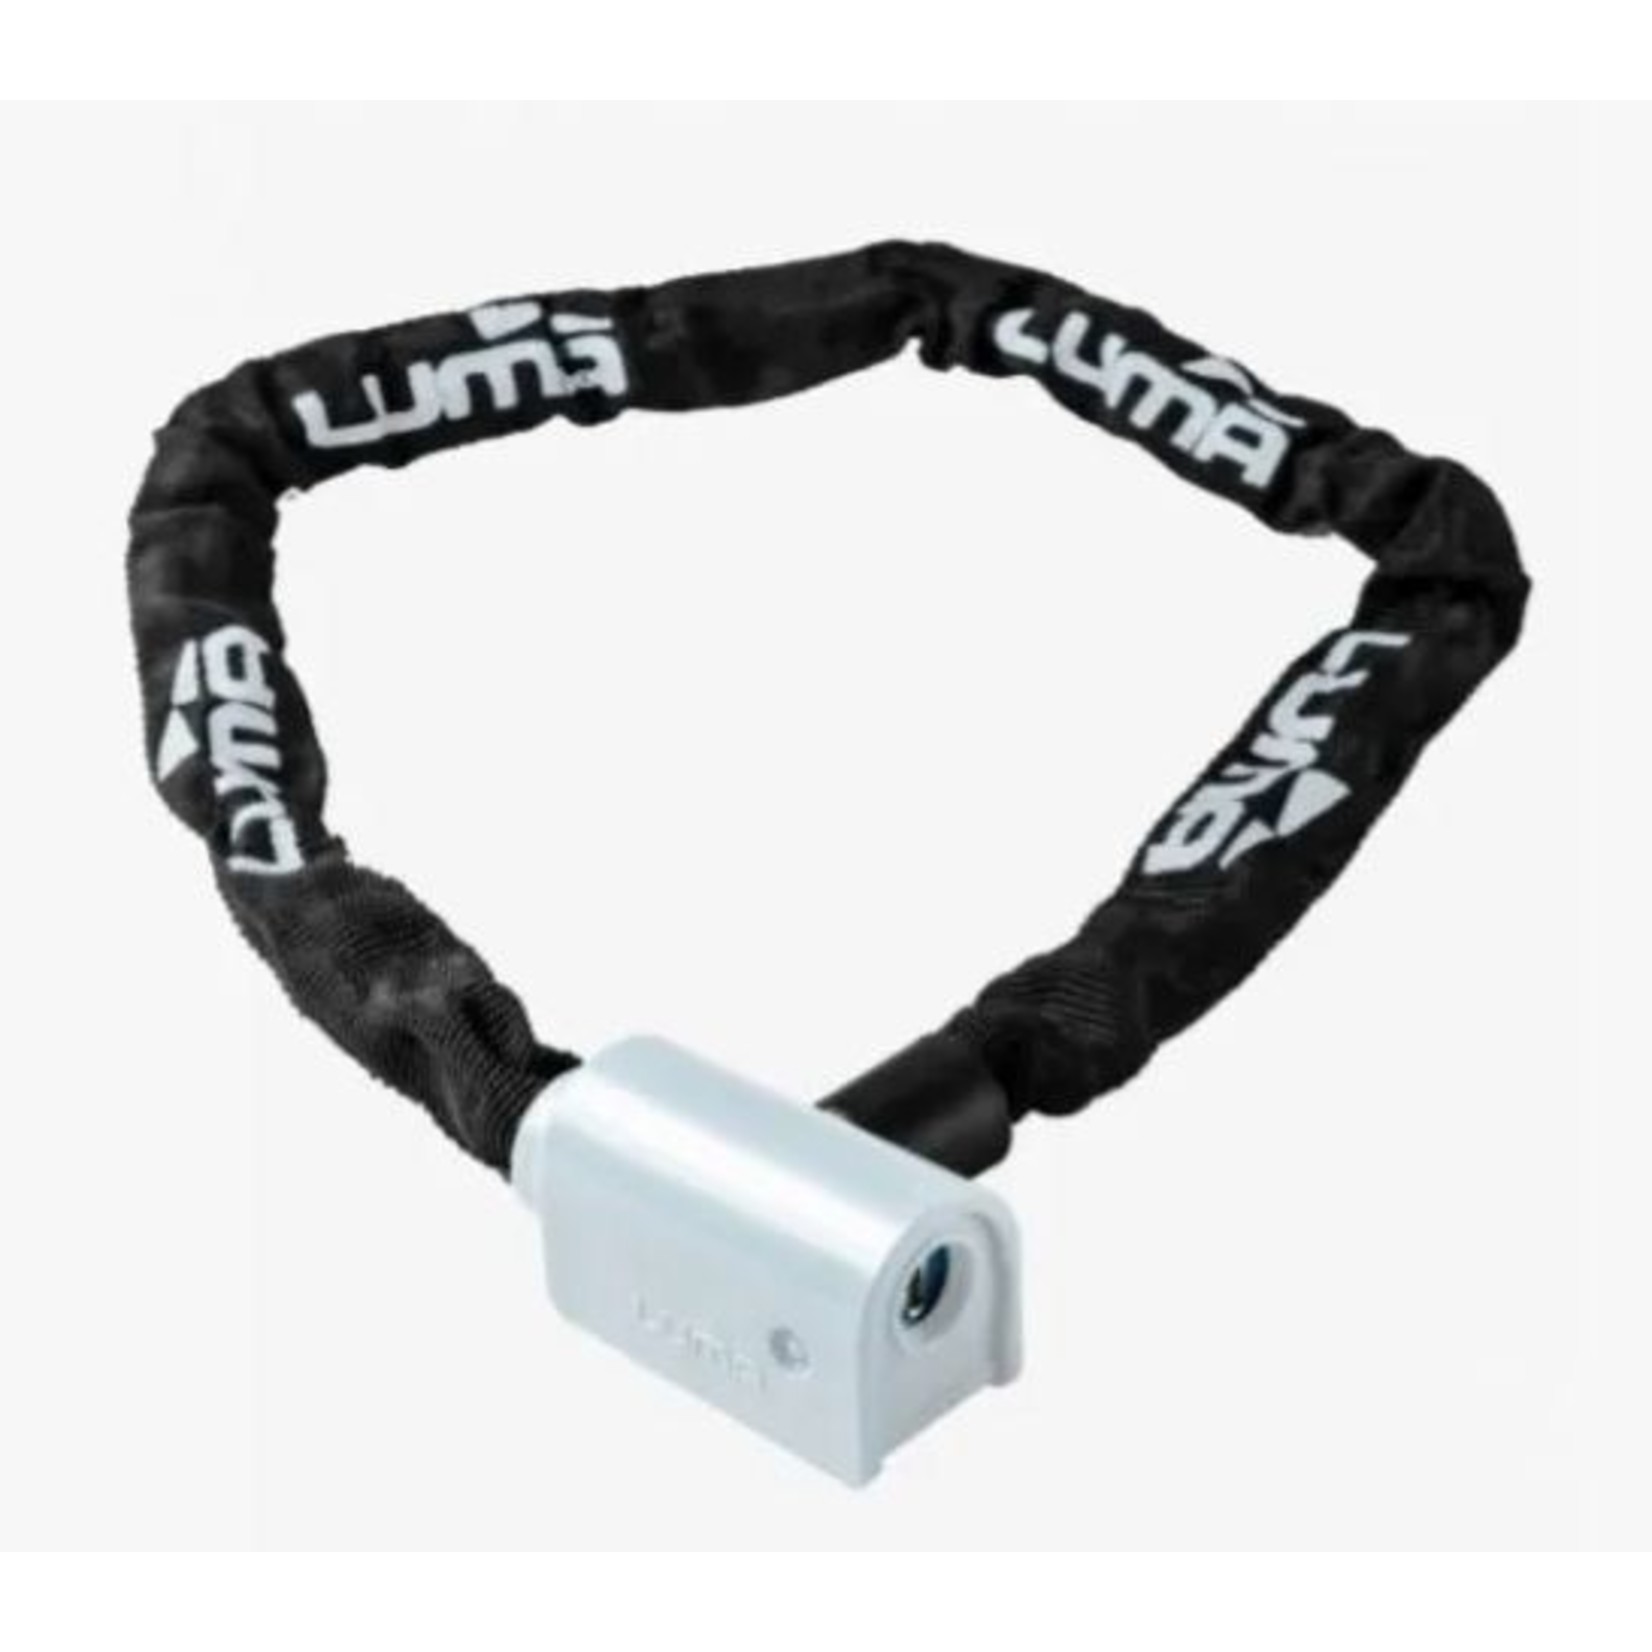 Luma Luma Bike/Cycling Lock - Key Lock Chain With Cover - 5mm X 1000mm